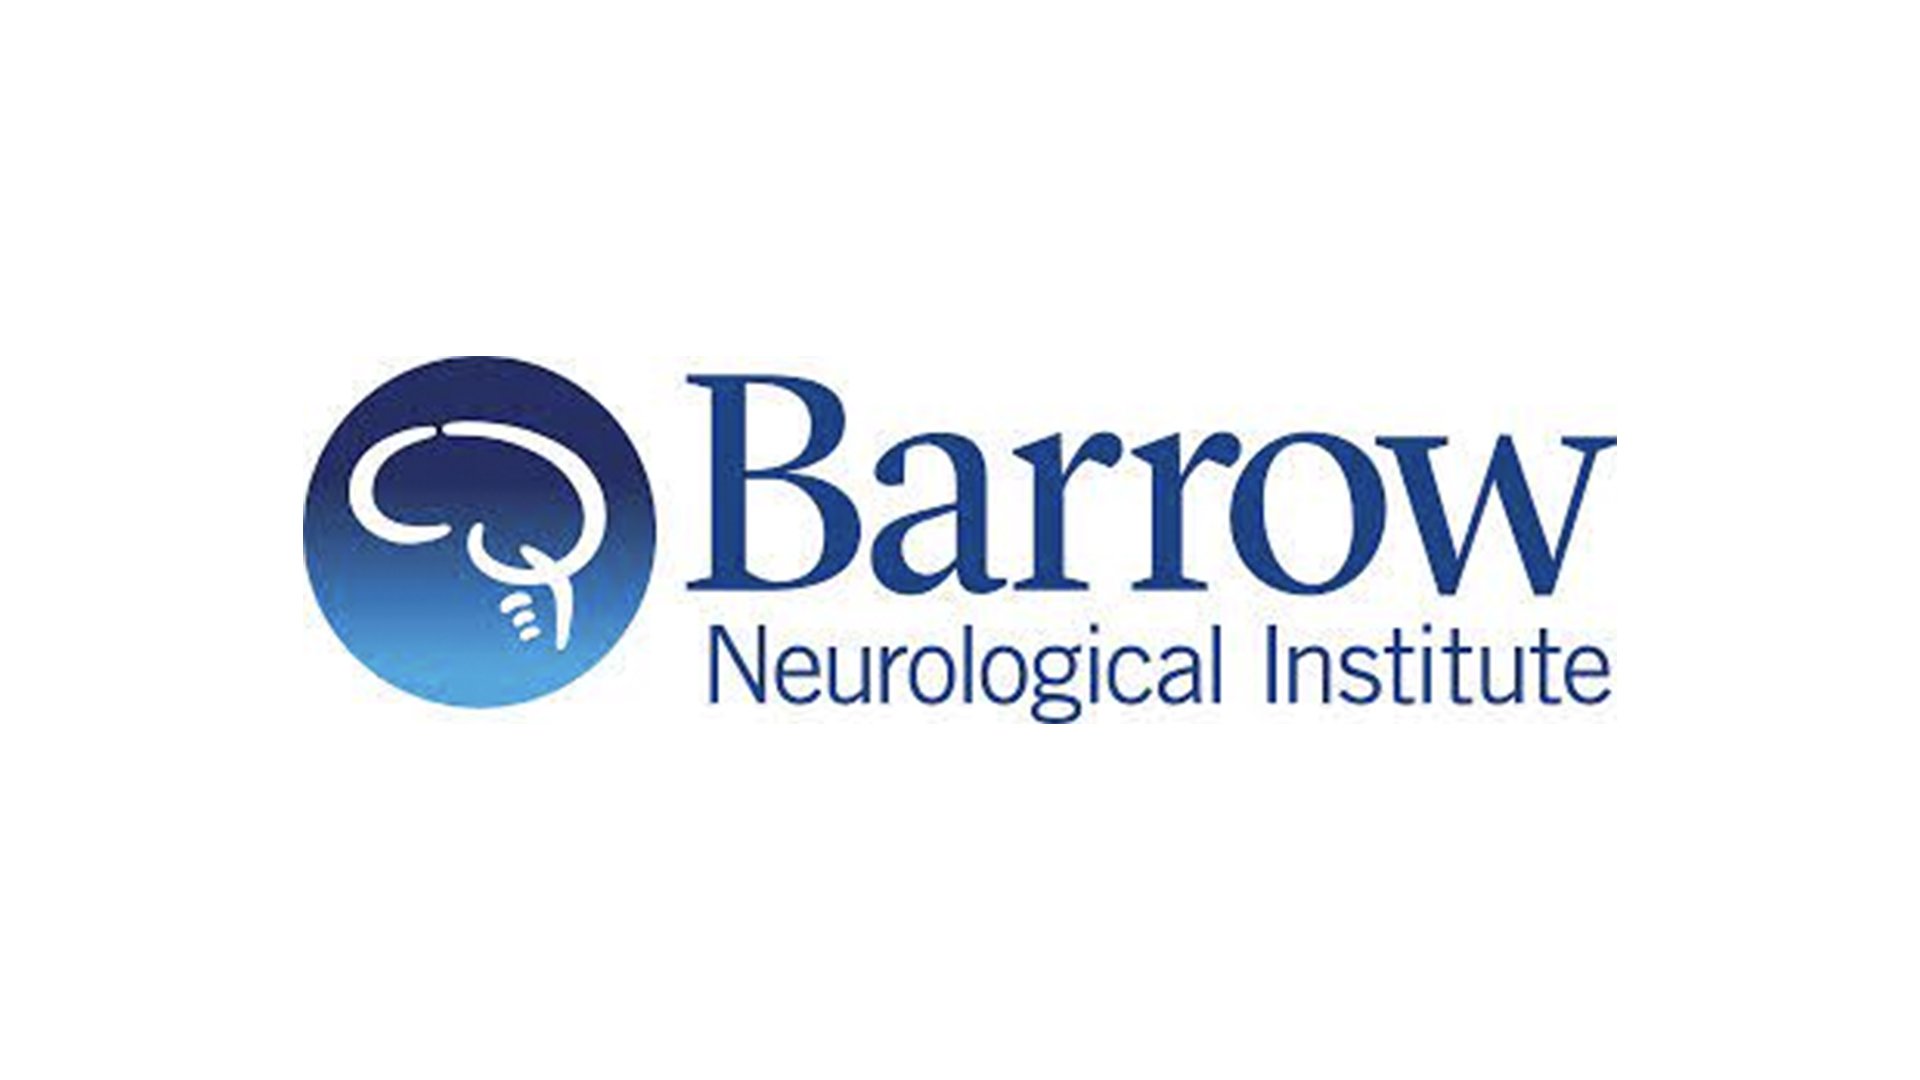 CEOi_0013_Barrow Neurological Institute.jpg